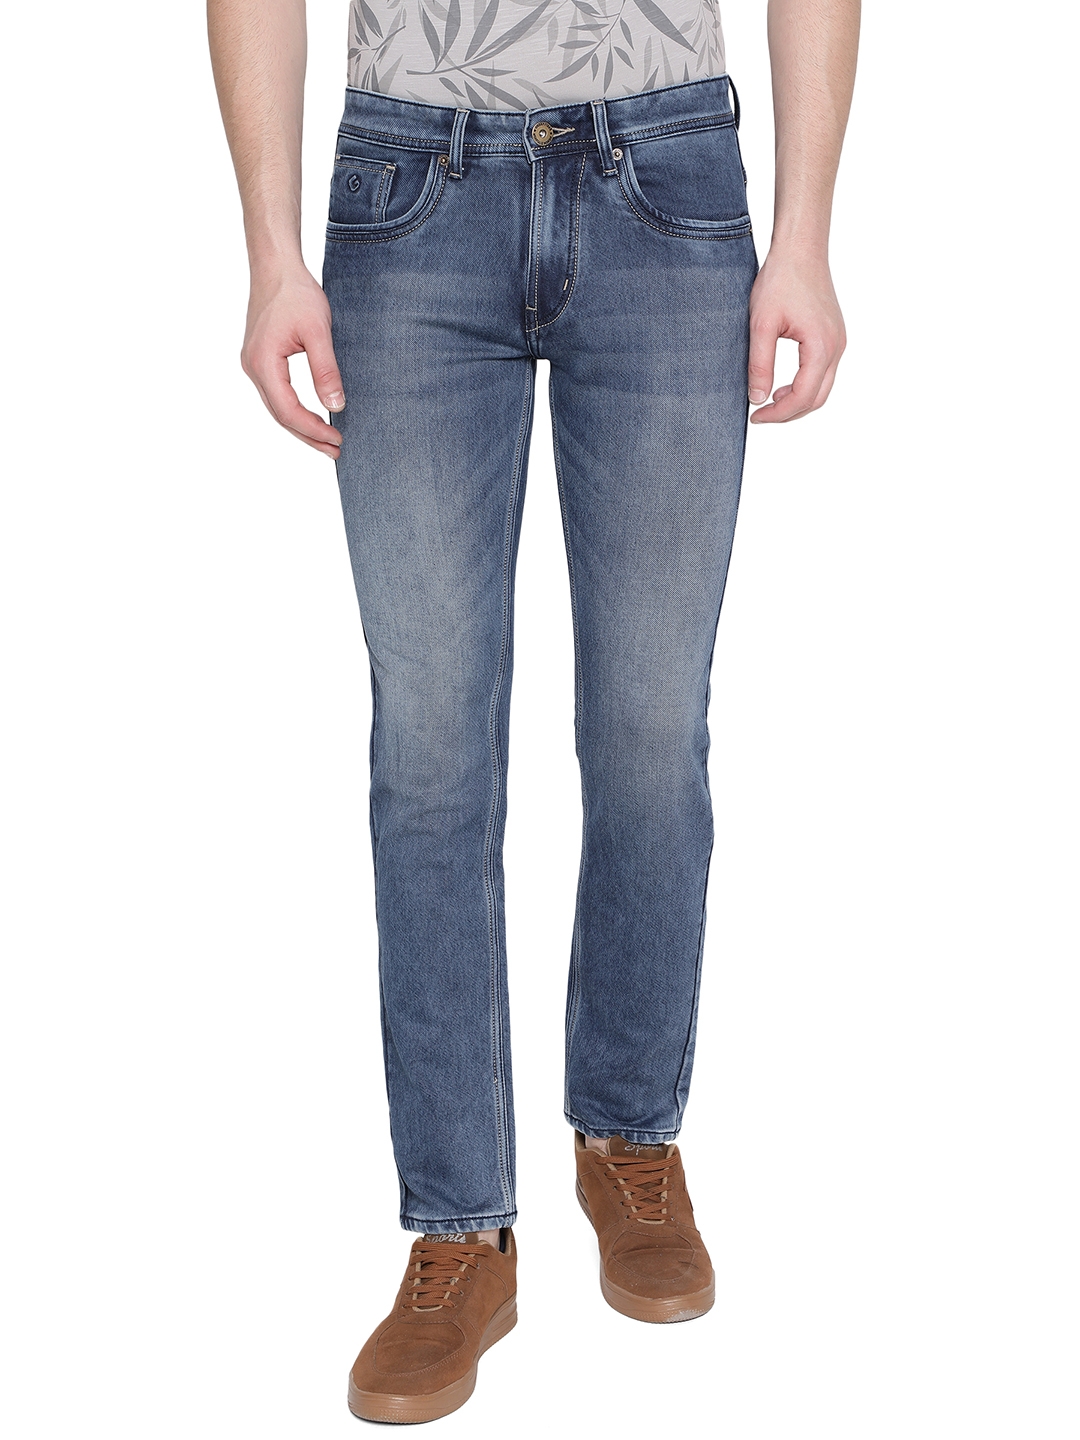 Greenfibre | Cloud Blue Solid Narrow Fit Jeans | Greenfibre